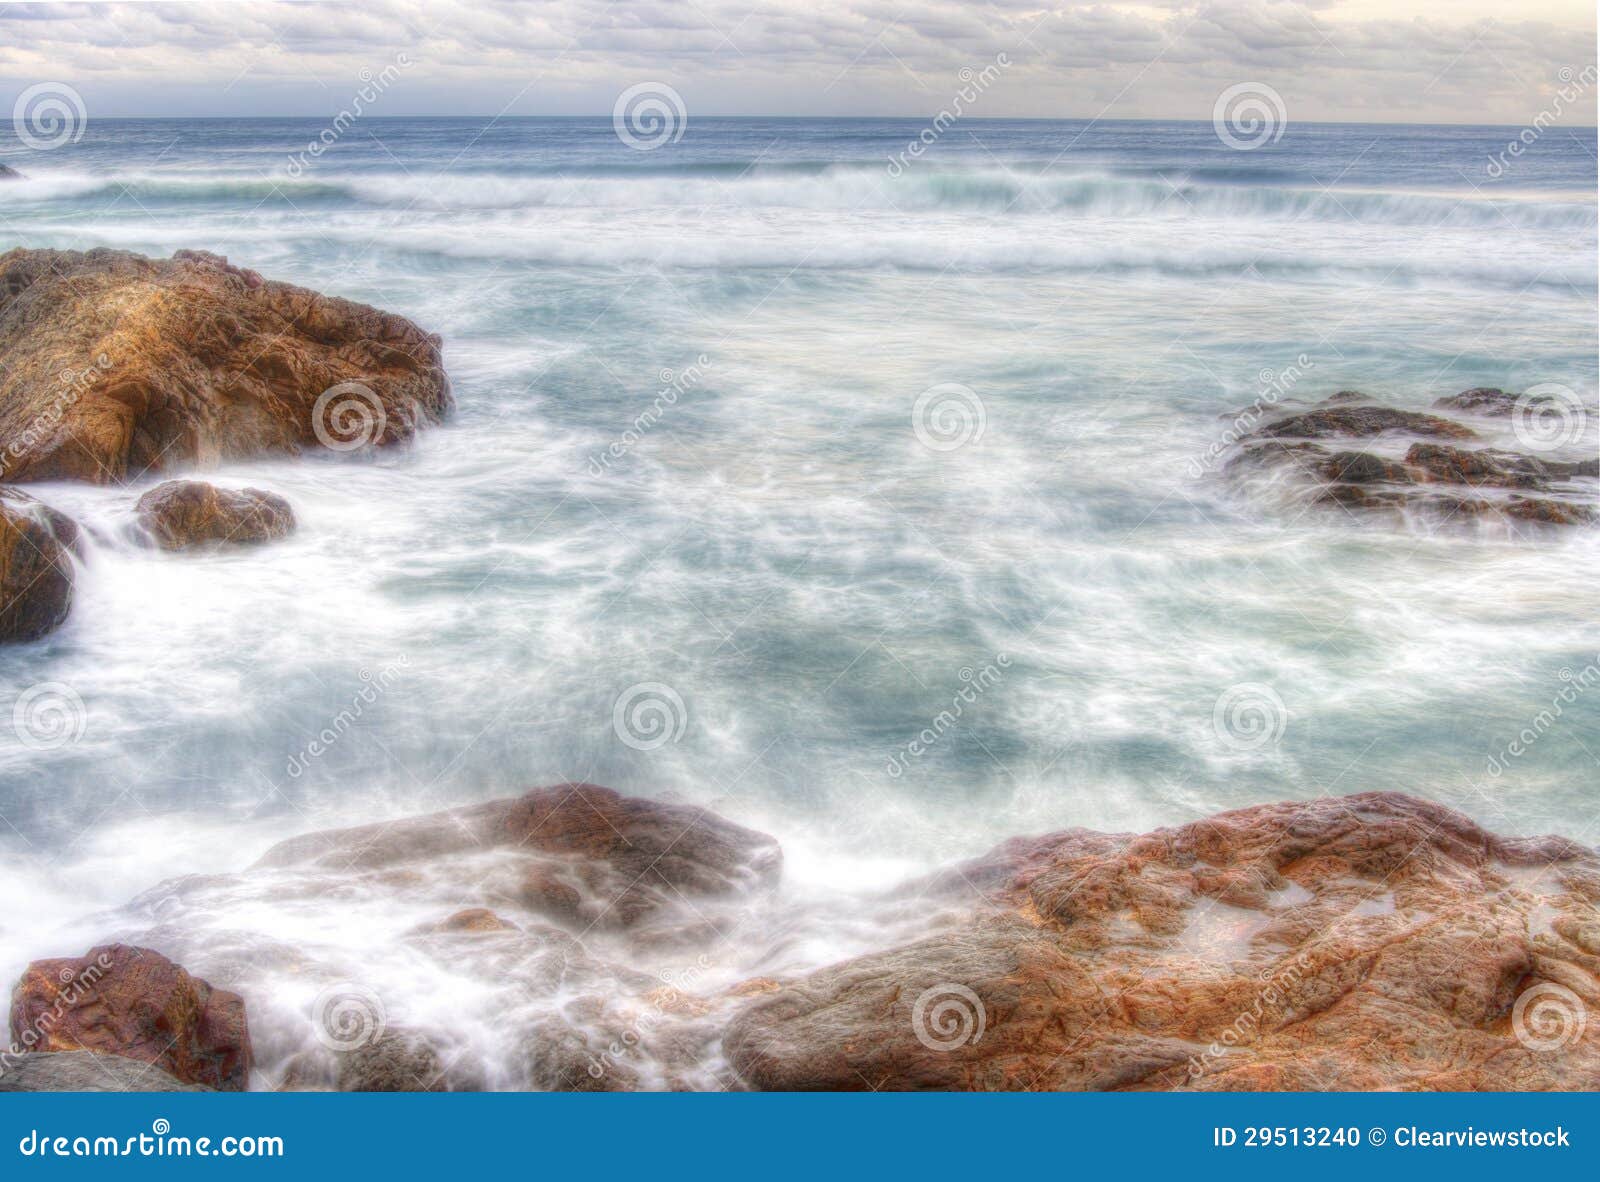 coffs harbour water on rocks